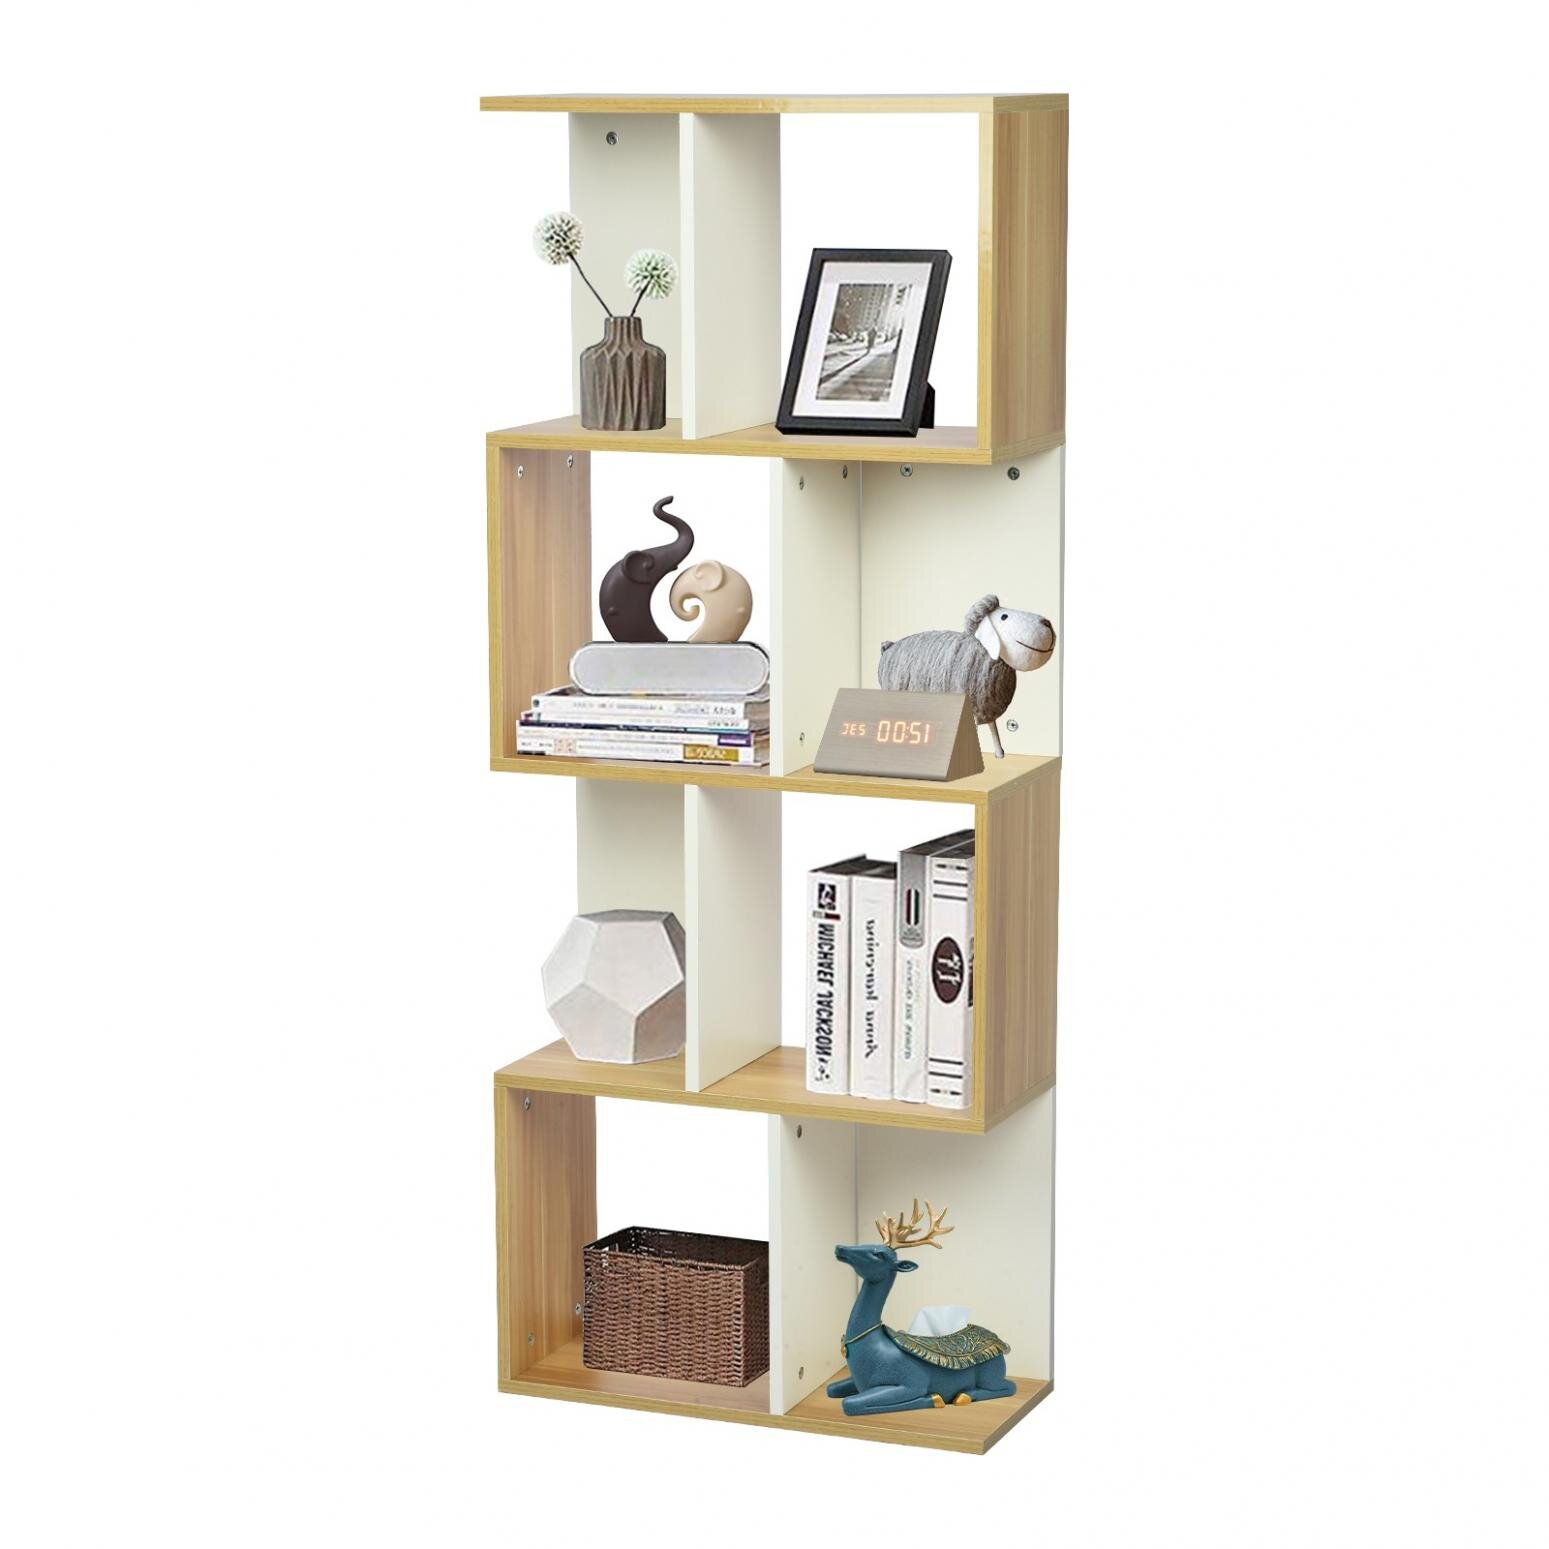 Details about   4Tier Shoe Rack Shelf Storage Stand Organizer Cabinet Closet Bookshelf Furniture 